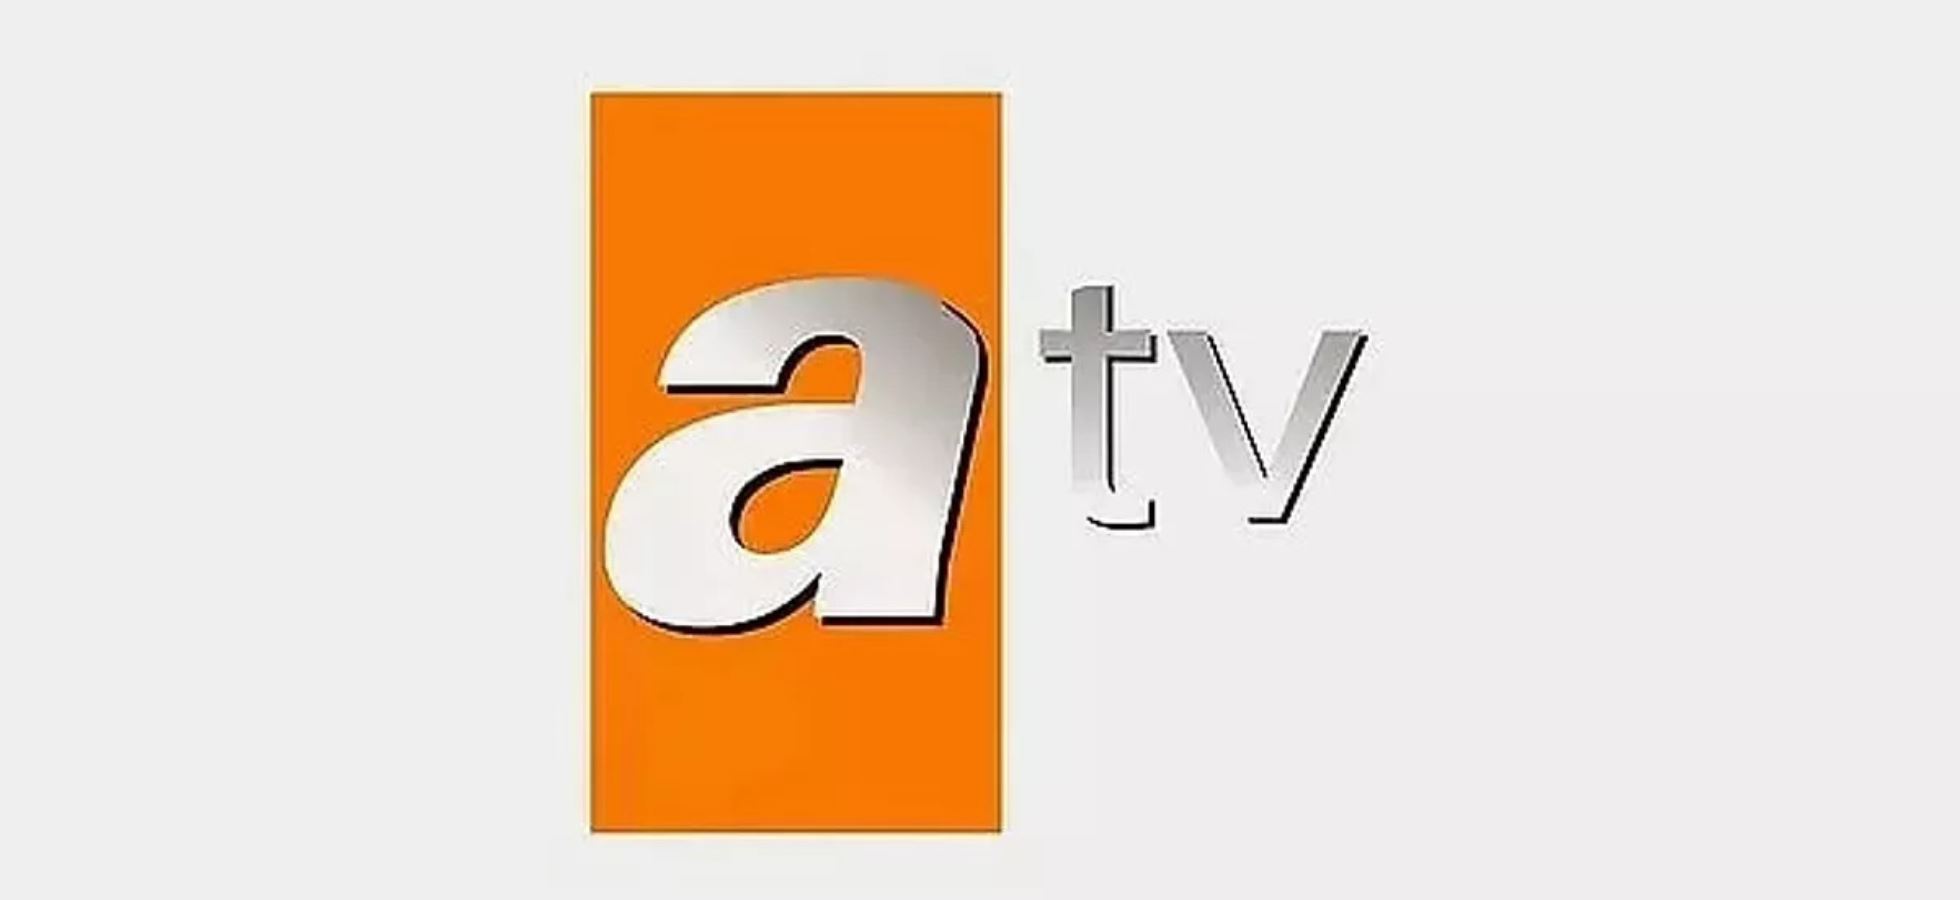 Atv tv canli yayim izle. Atv (Турция). Atv logo. Atv Турция прямой эфир. АТВ ФМОС ТВ.